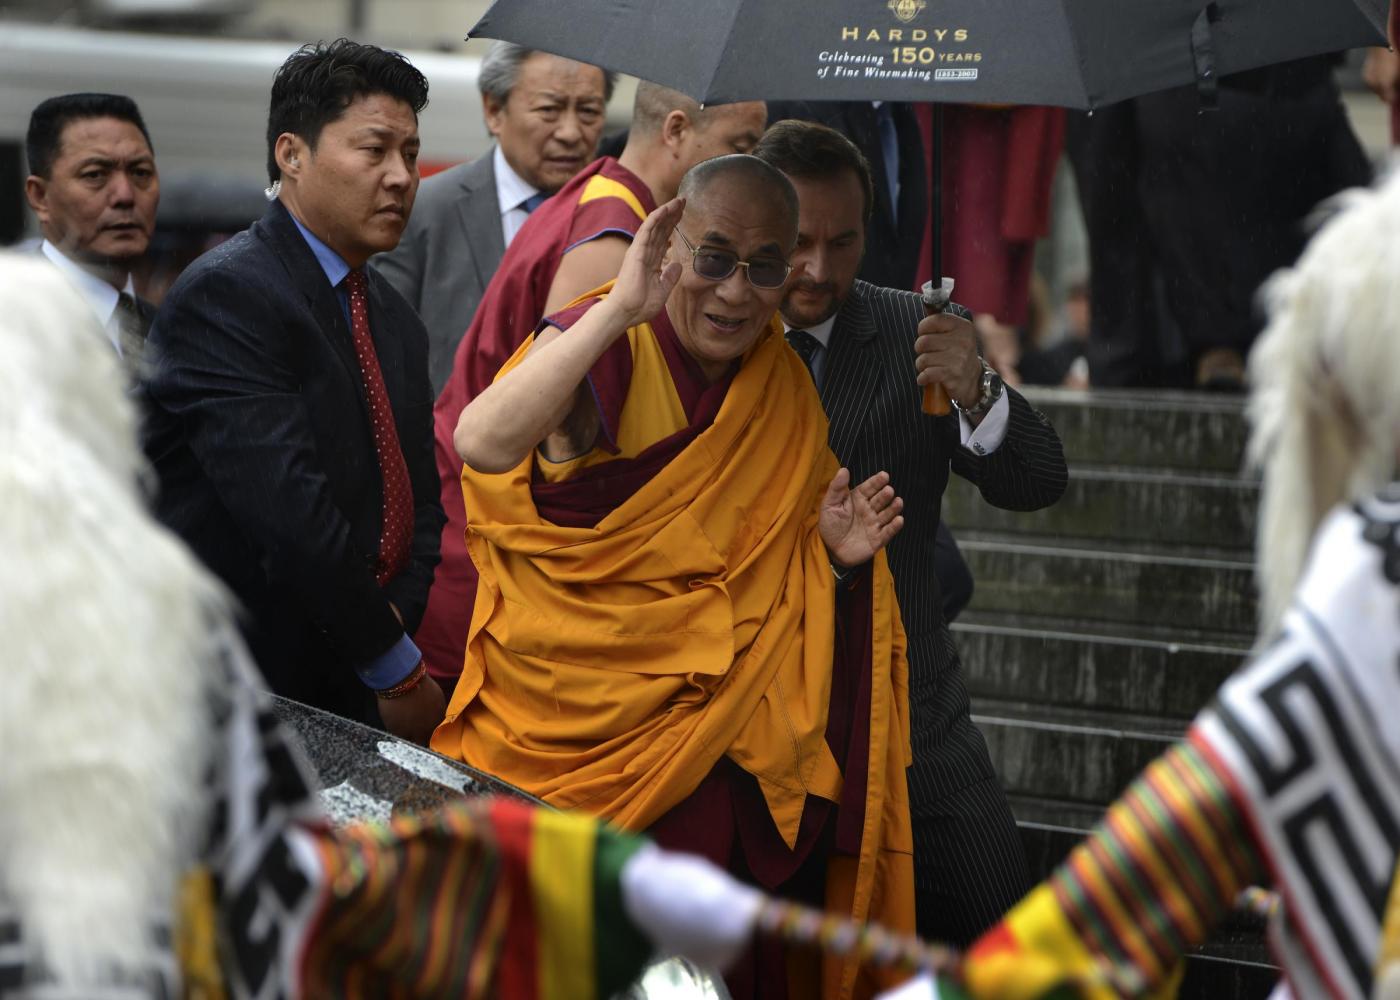 Dalai Lama in visita alla cattedrale St Pauls04